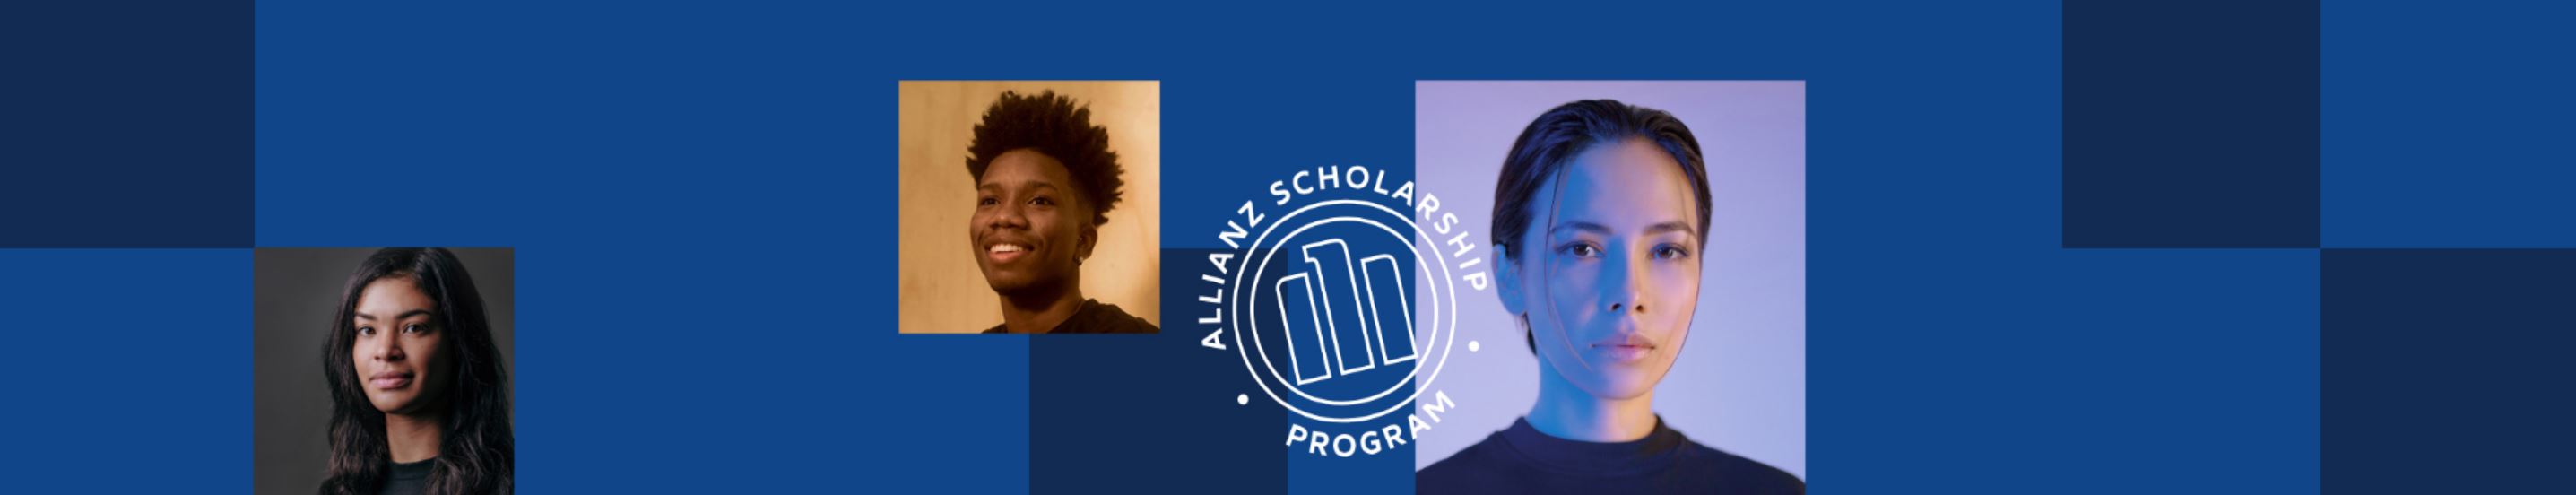 Stipendia - Allianz Scholarship Program